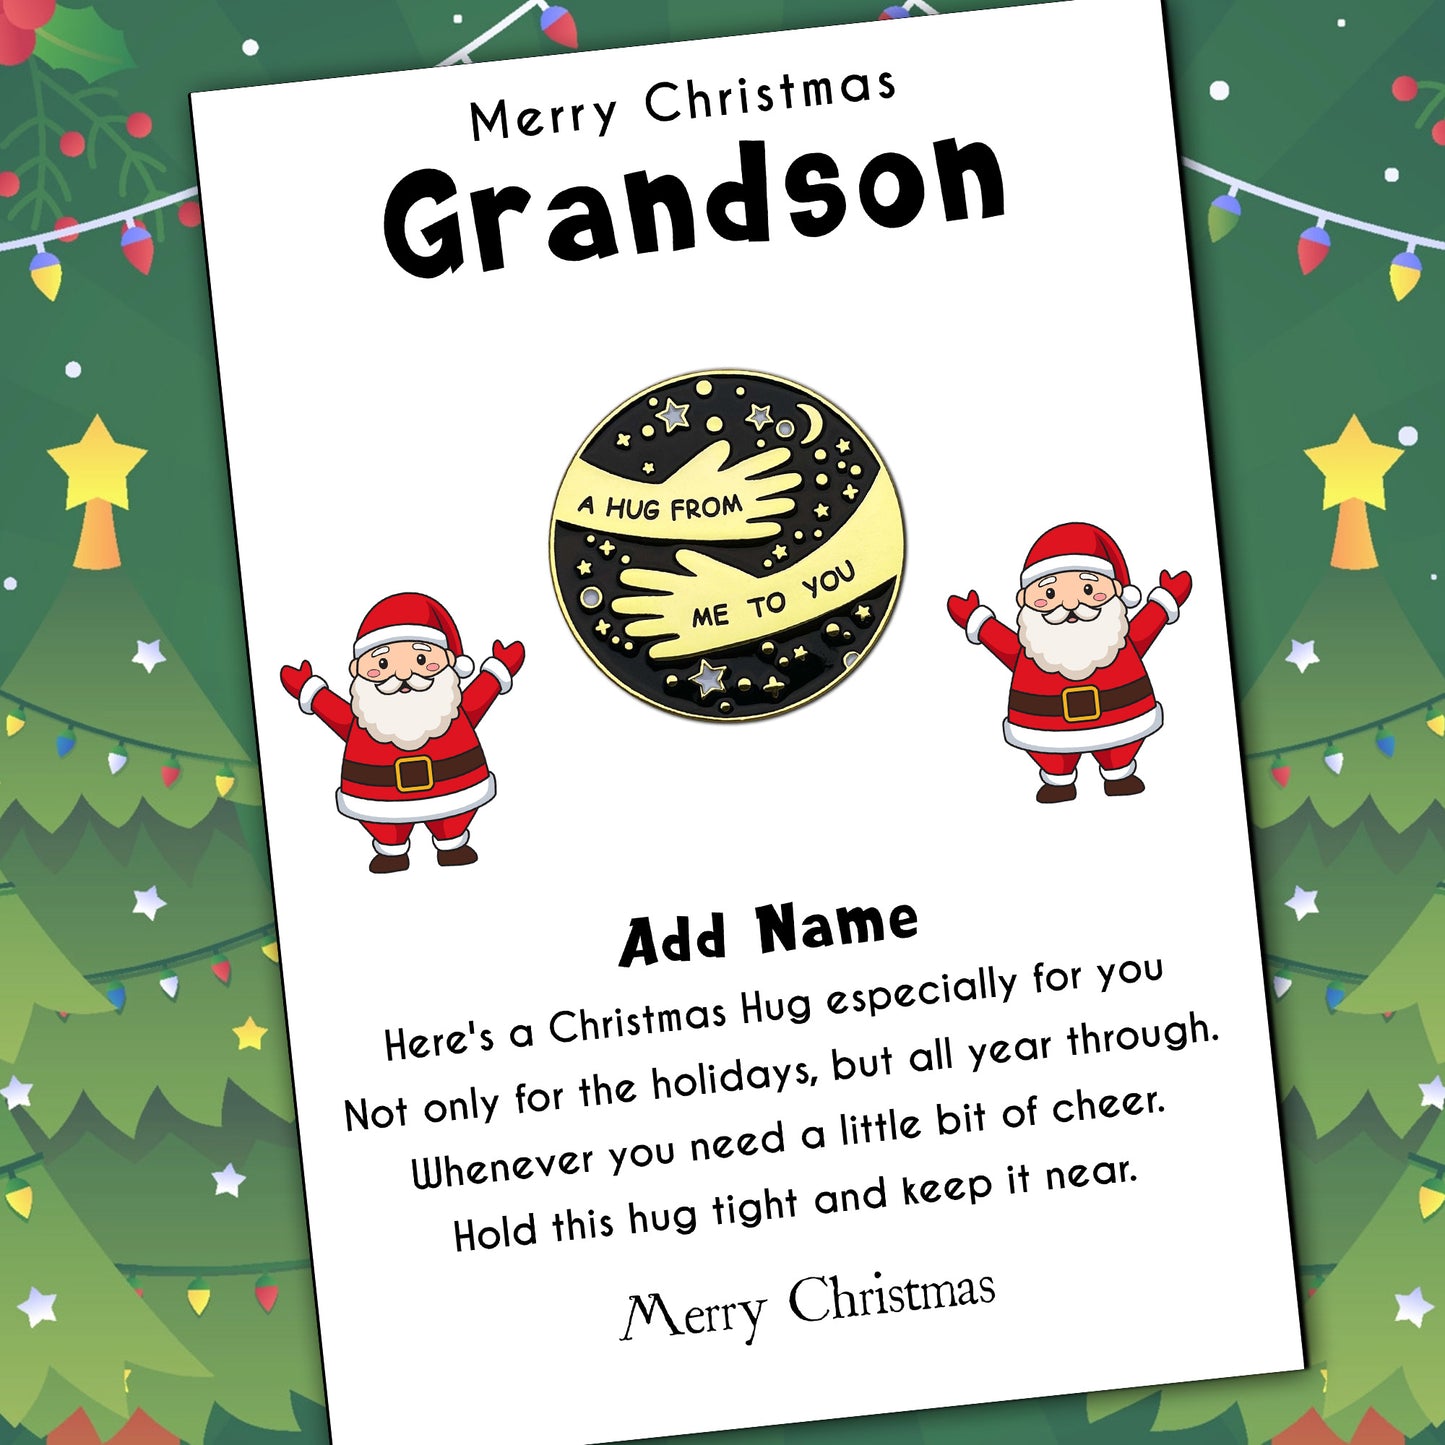 Santa Claus Hug Pin Badges & Personalised Grandson Message Card